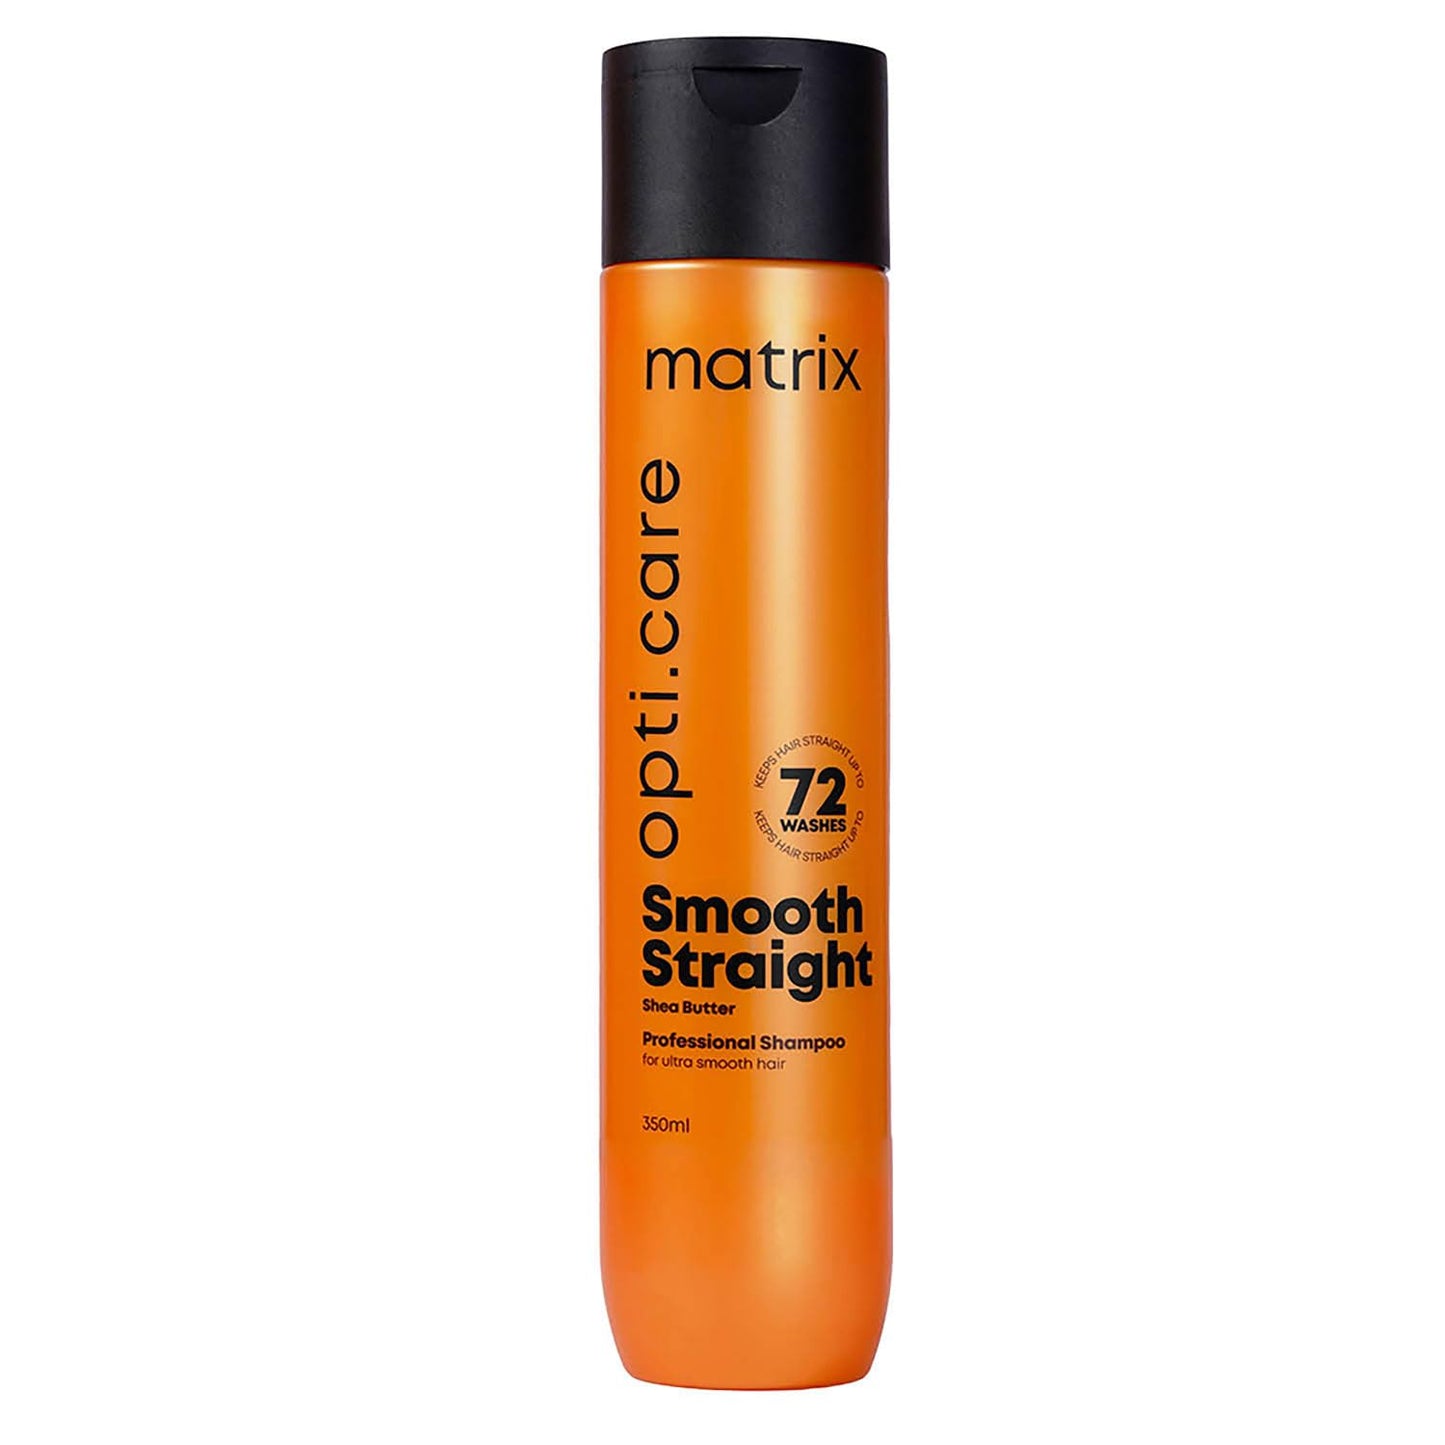 Matrix Opti Care Smooth Straight Professional Shampoo 350ML